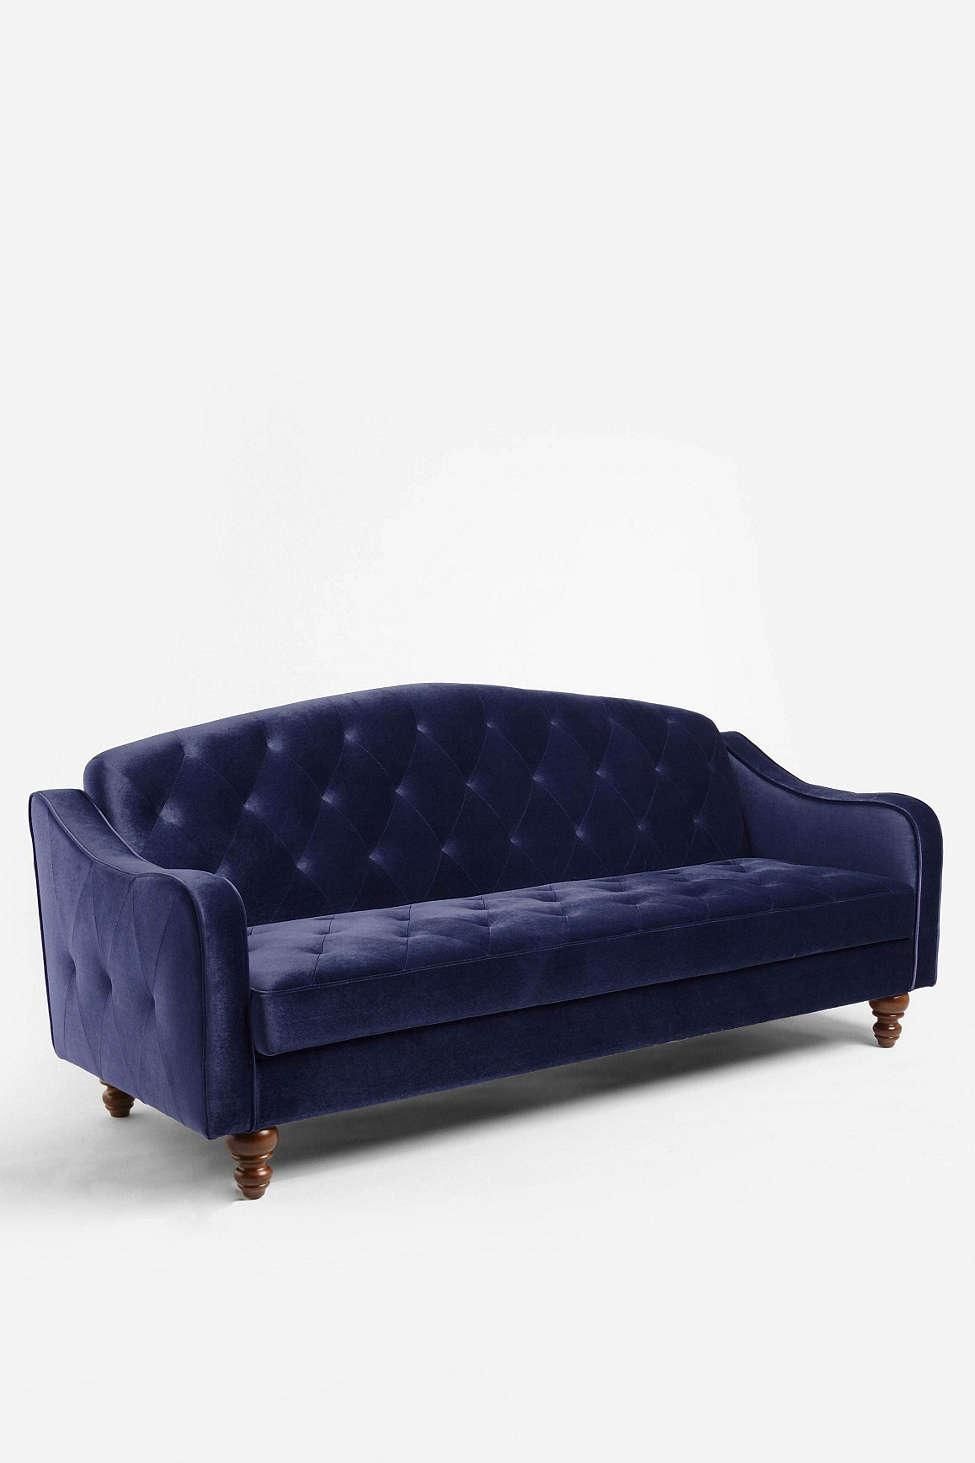 Urban Outfitters Ava Velvet Tufted Sleeper Sofa – Copycatchic For Ava Velvet Tufted Sleeper Sofas (View 1 of 20)